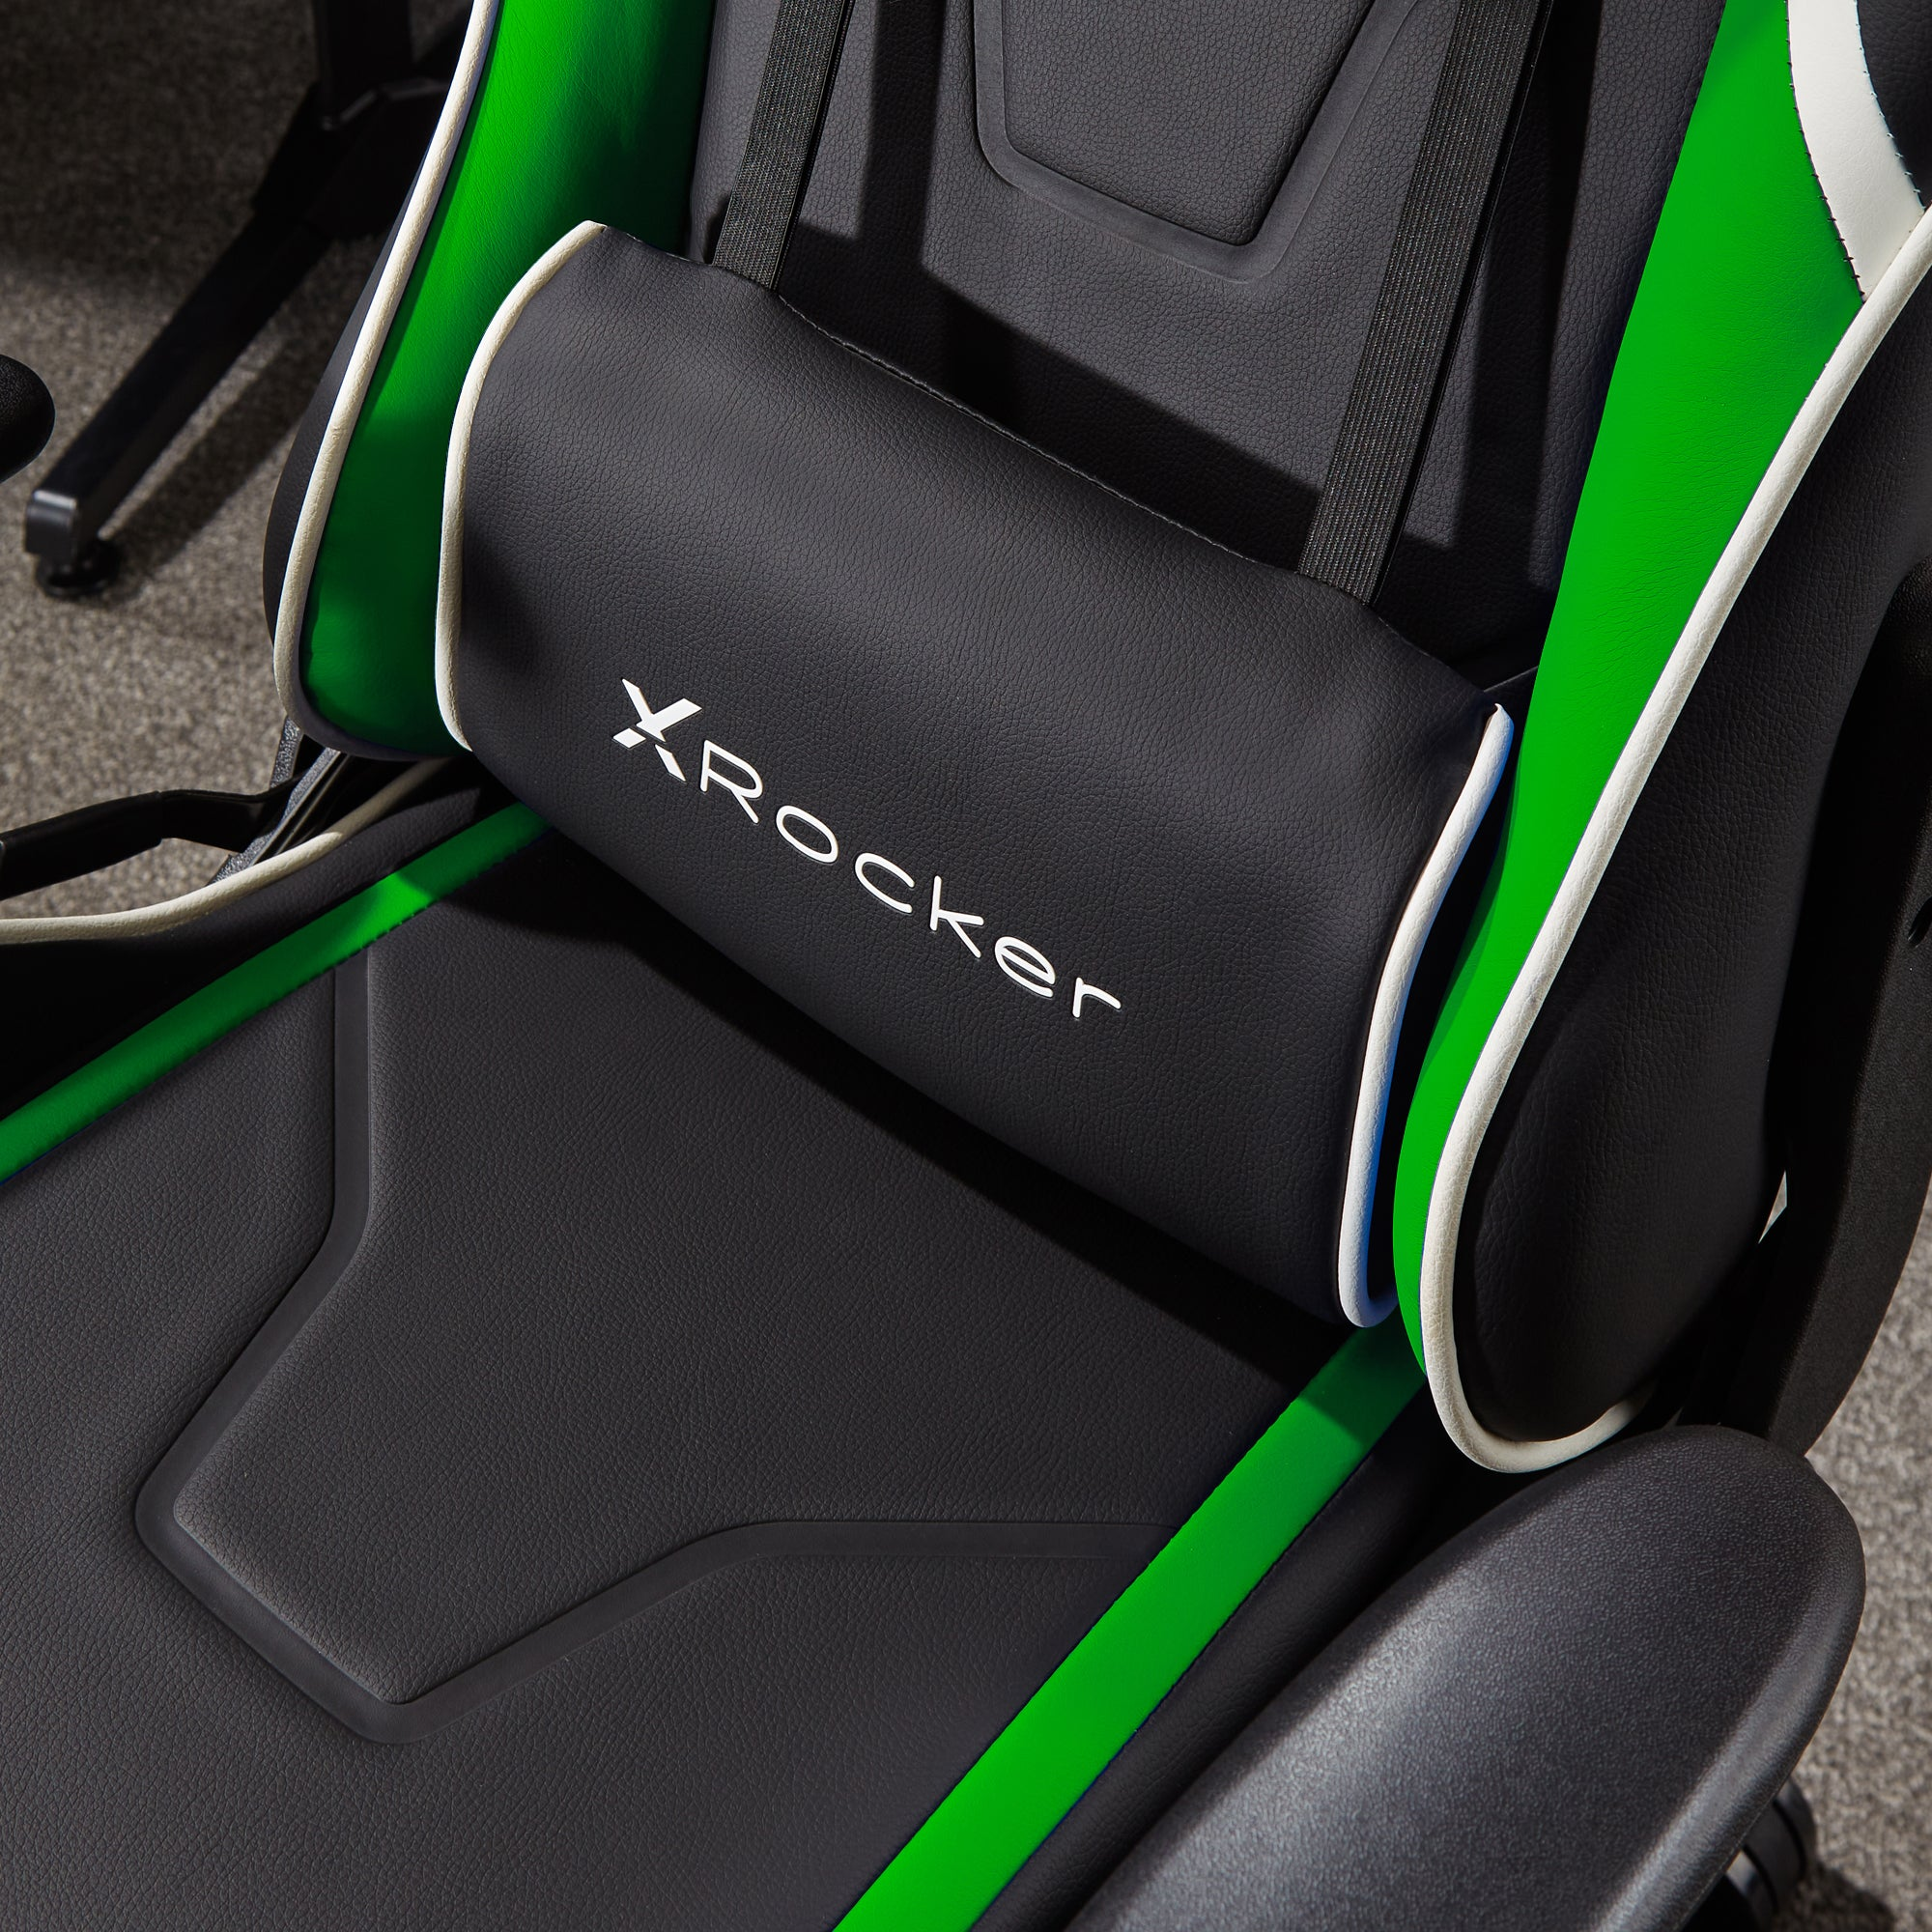 X ROCKER Agility Compact Stuhl, Gaming Grün